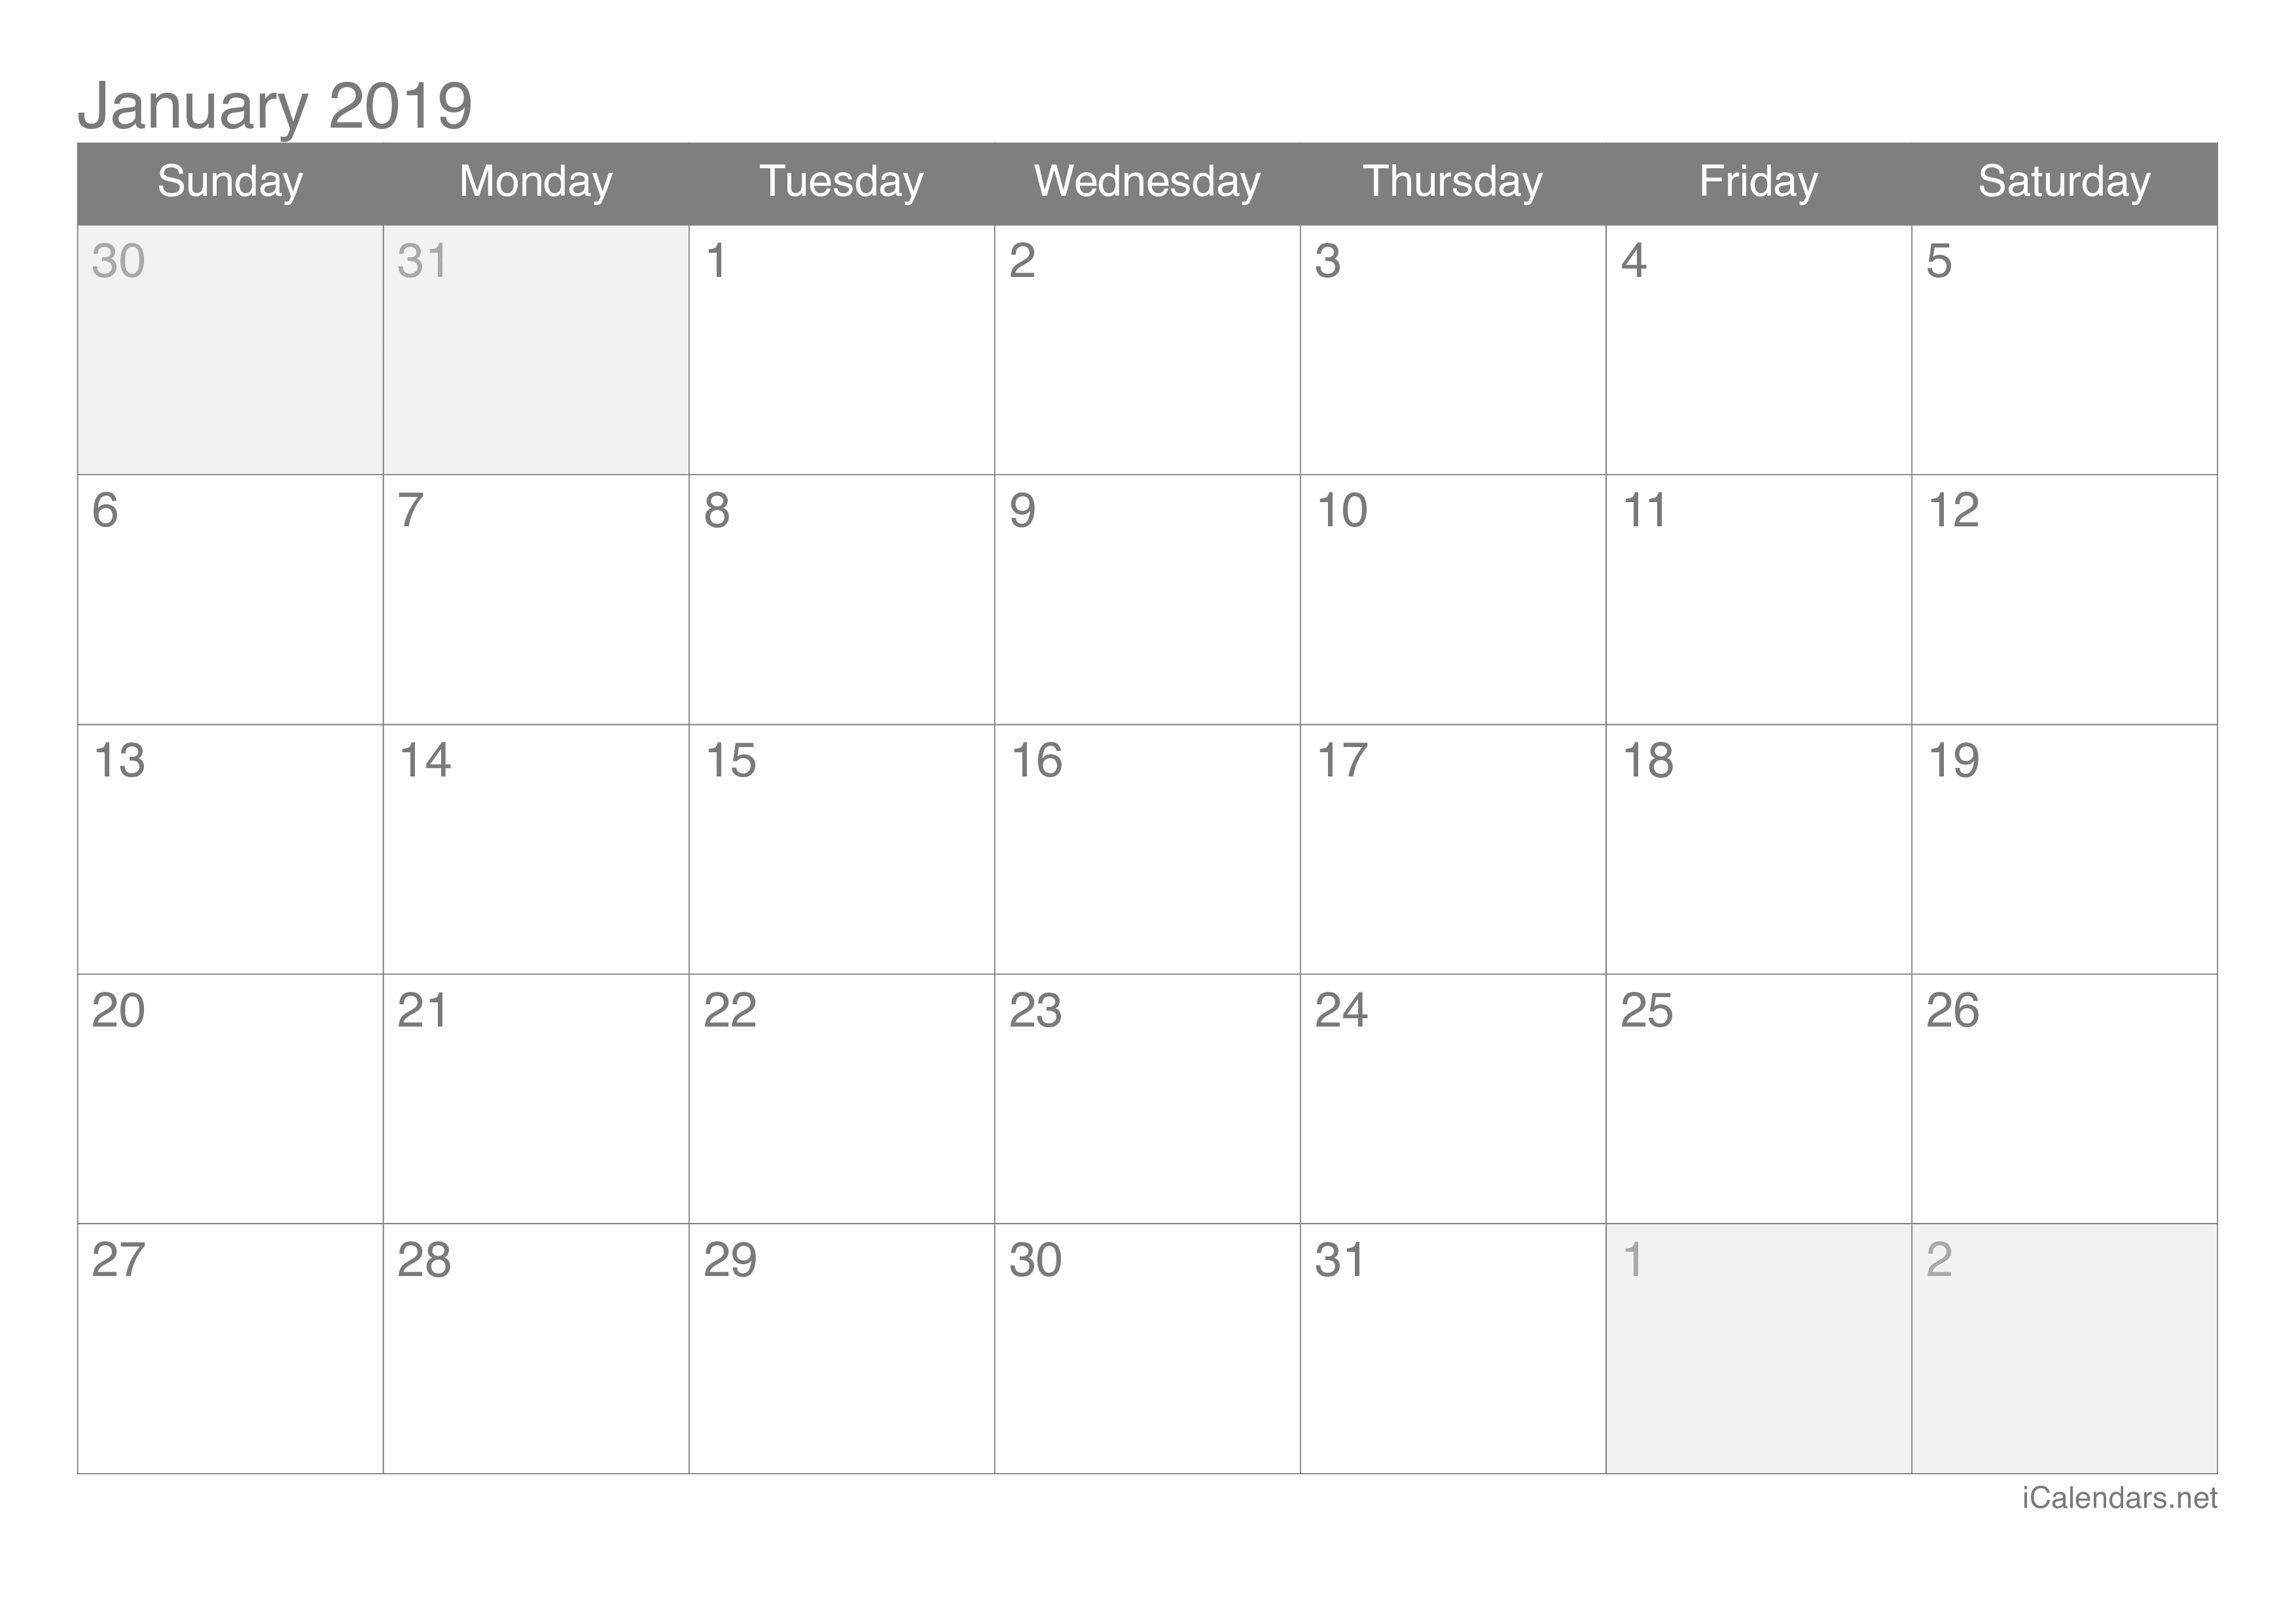 January 2019 Printable Calendar icalendars net